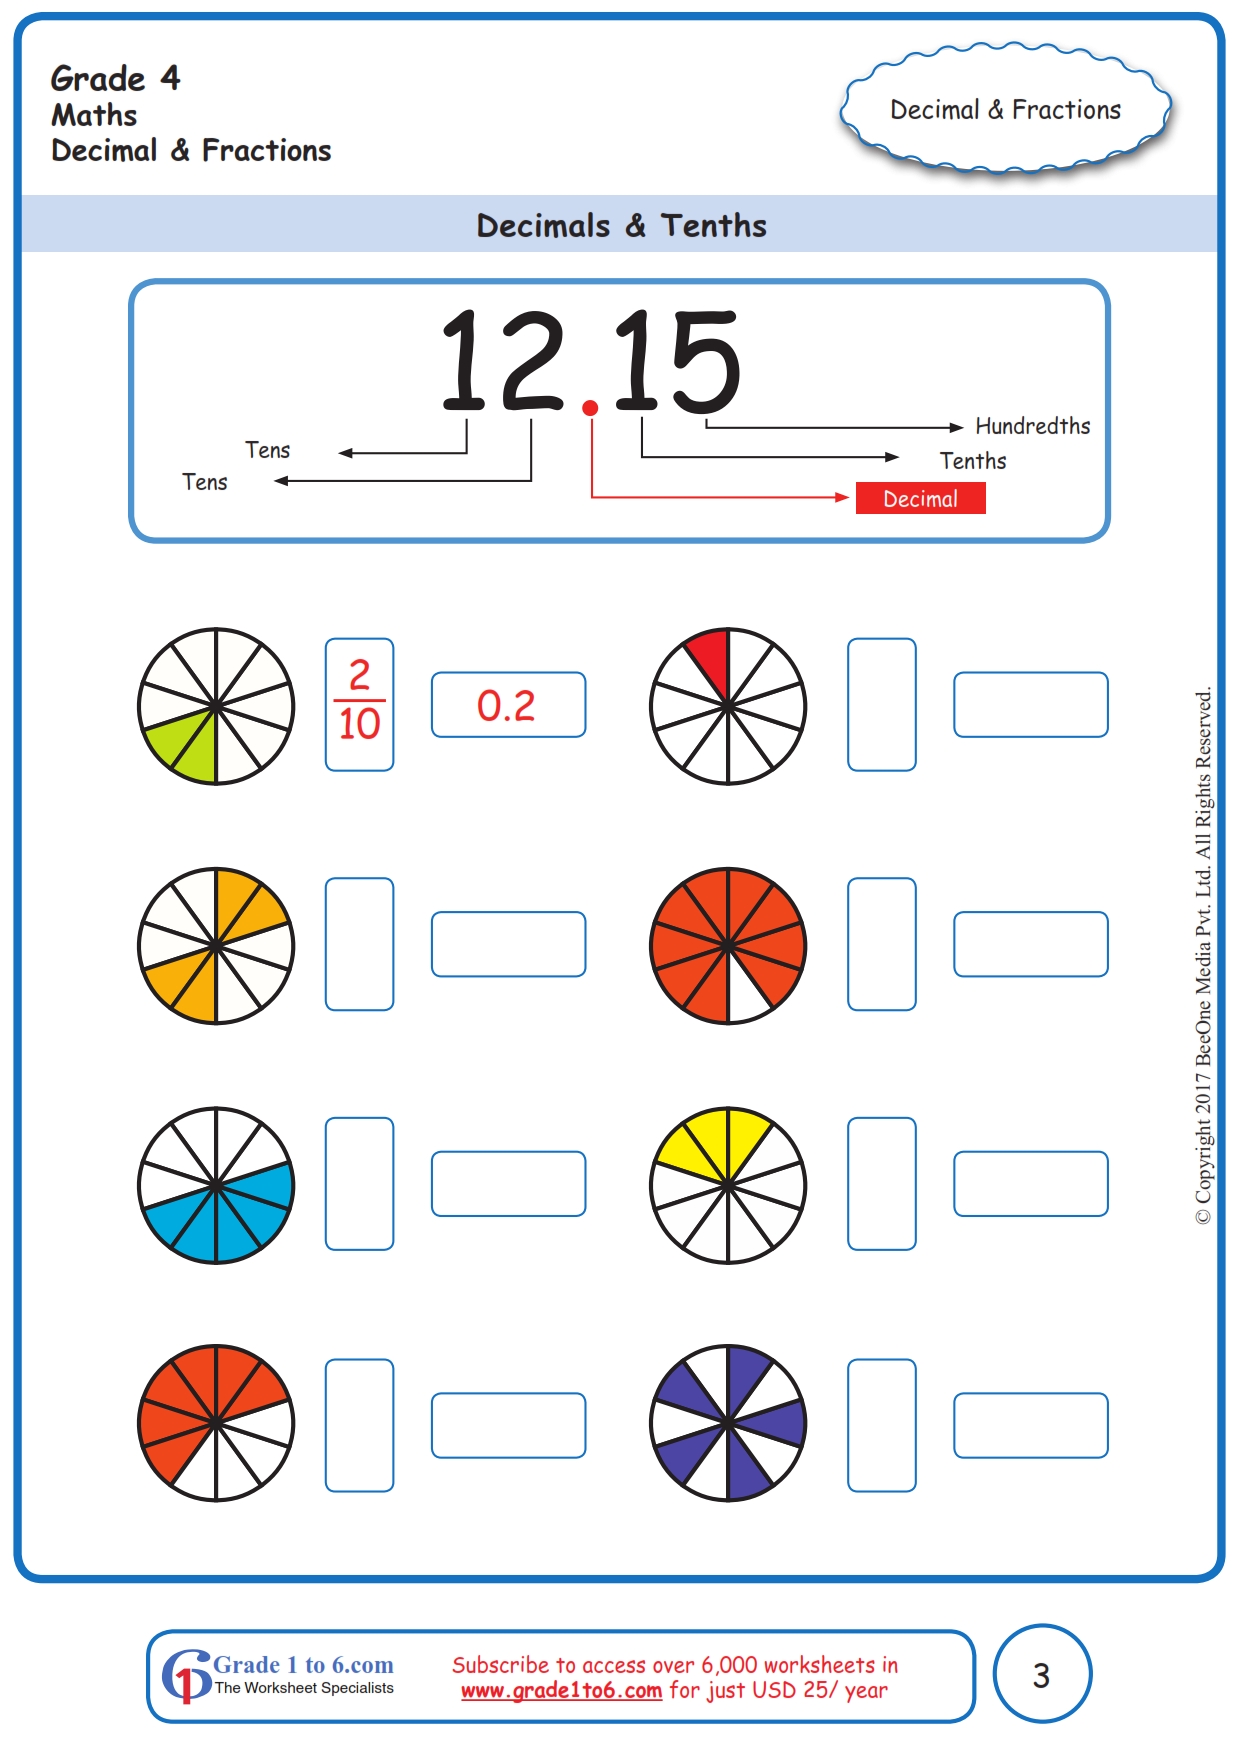 grade 4 decimals worksheets www grade1to6 com